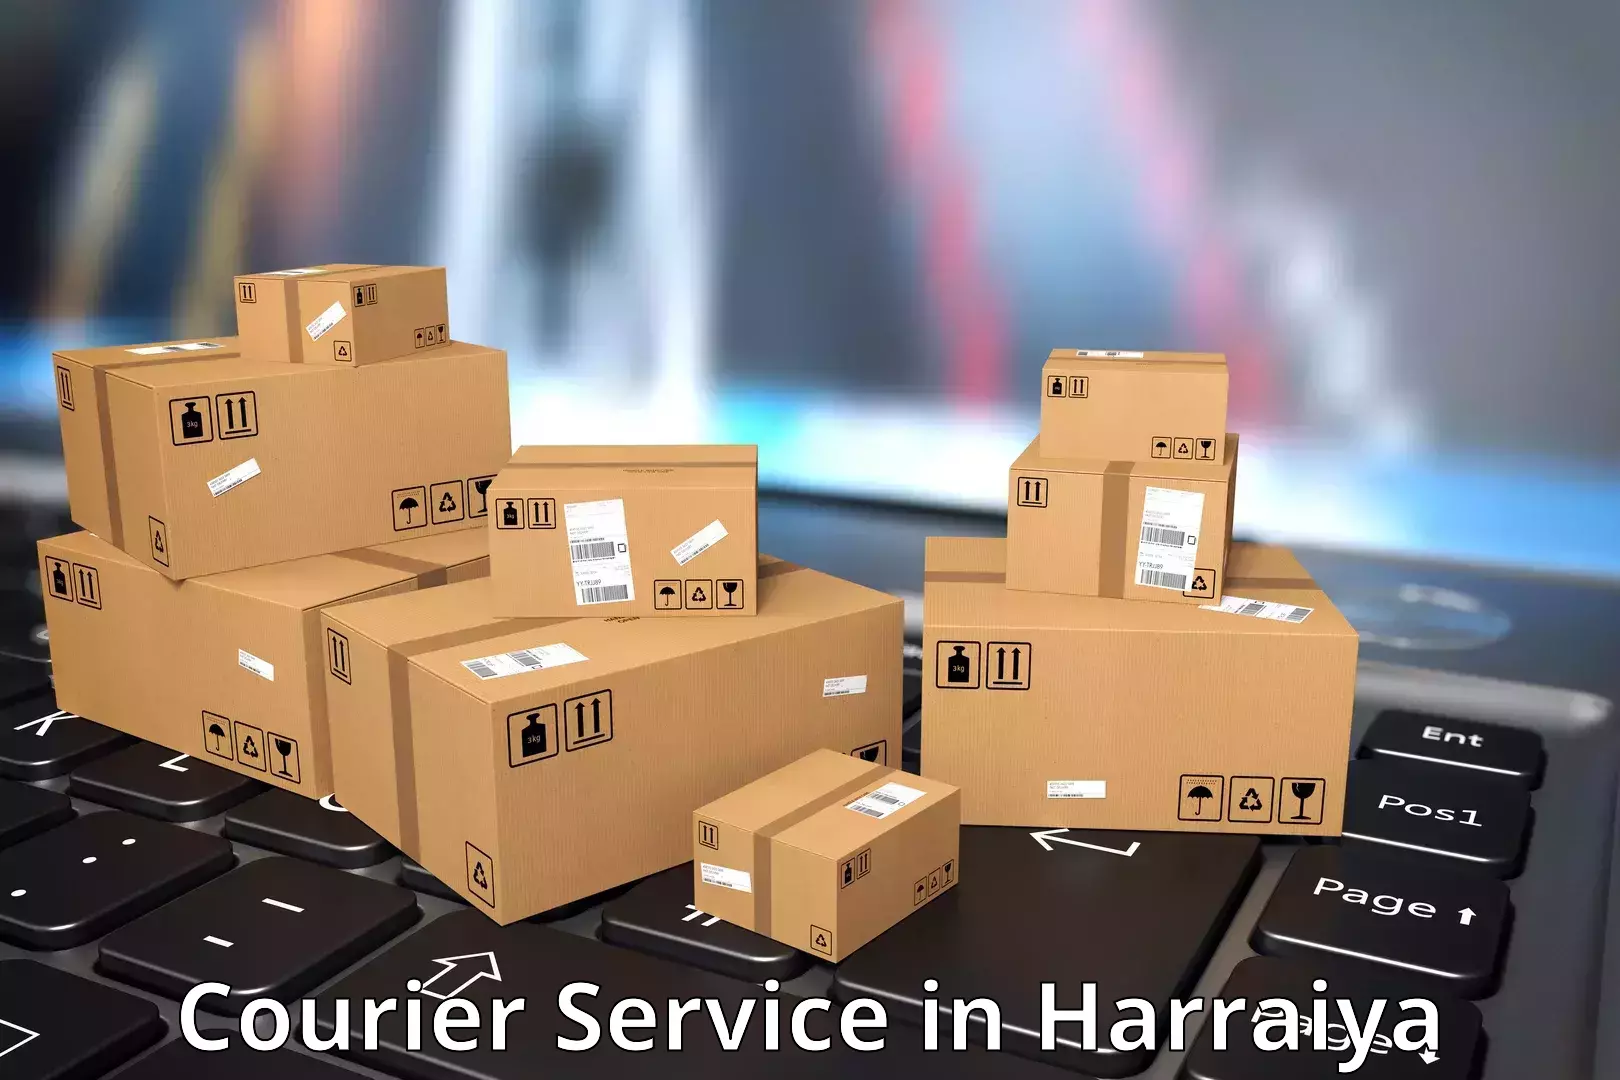 Courier service booking in Harraiya